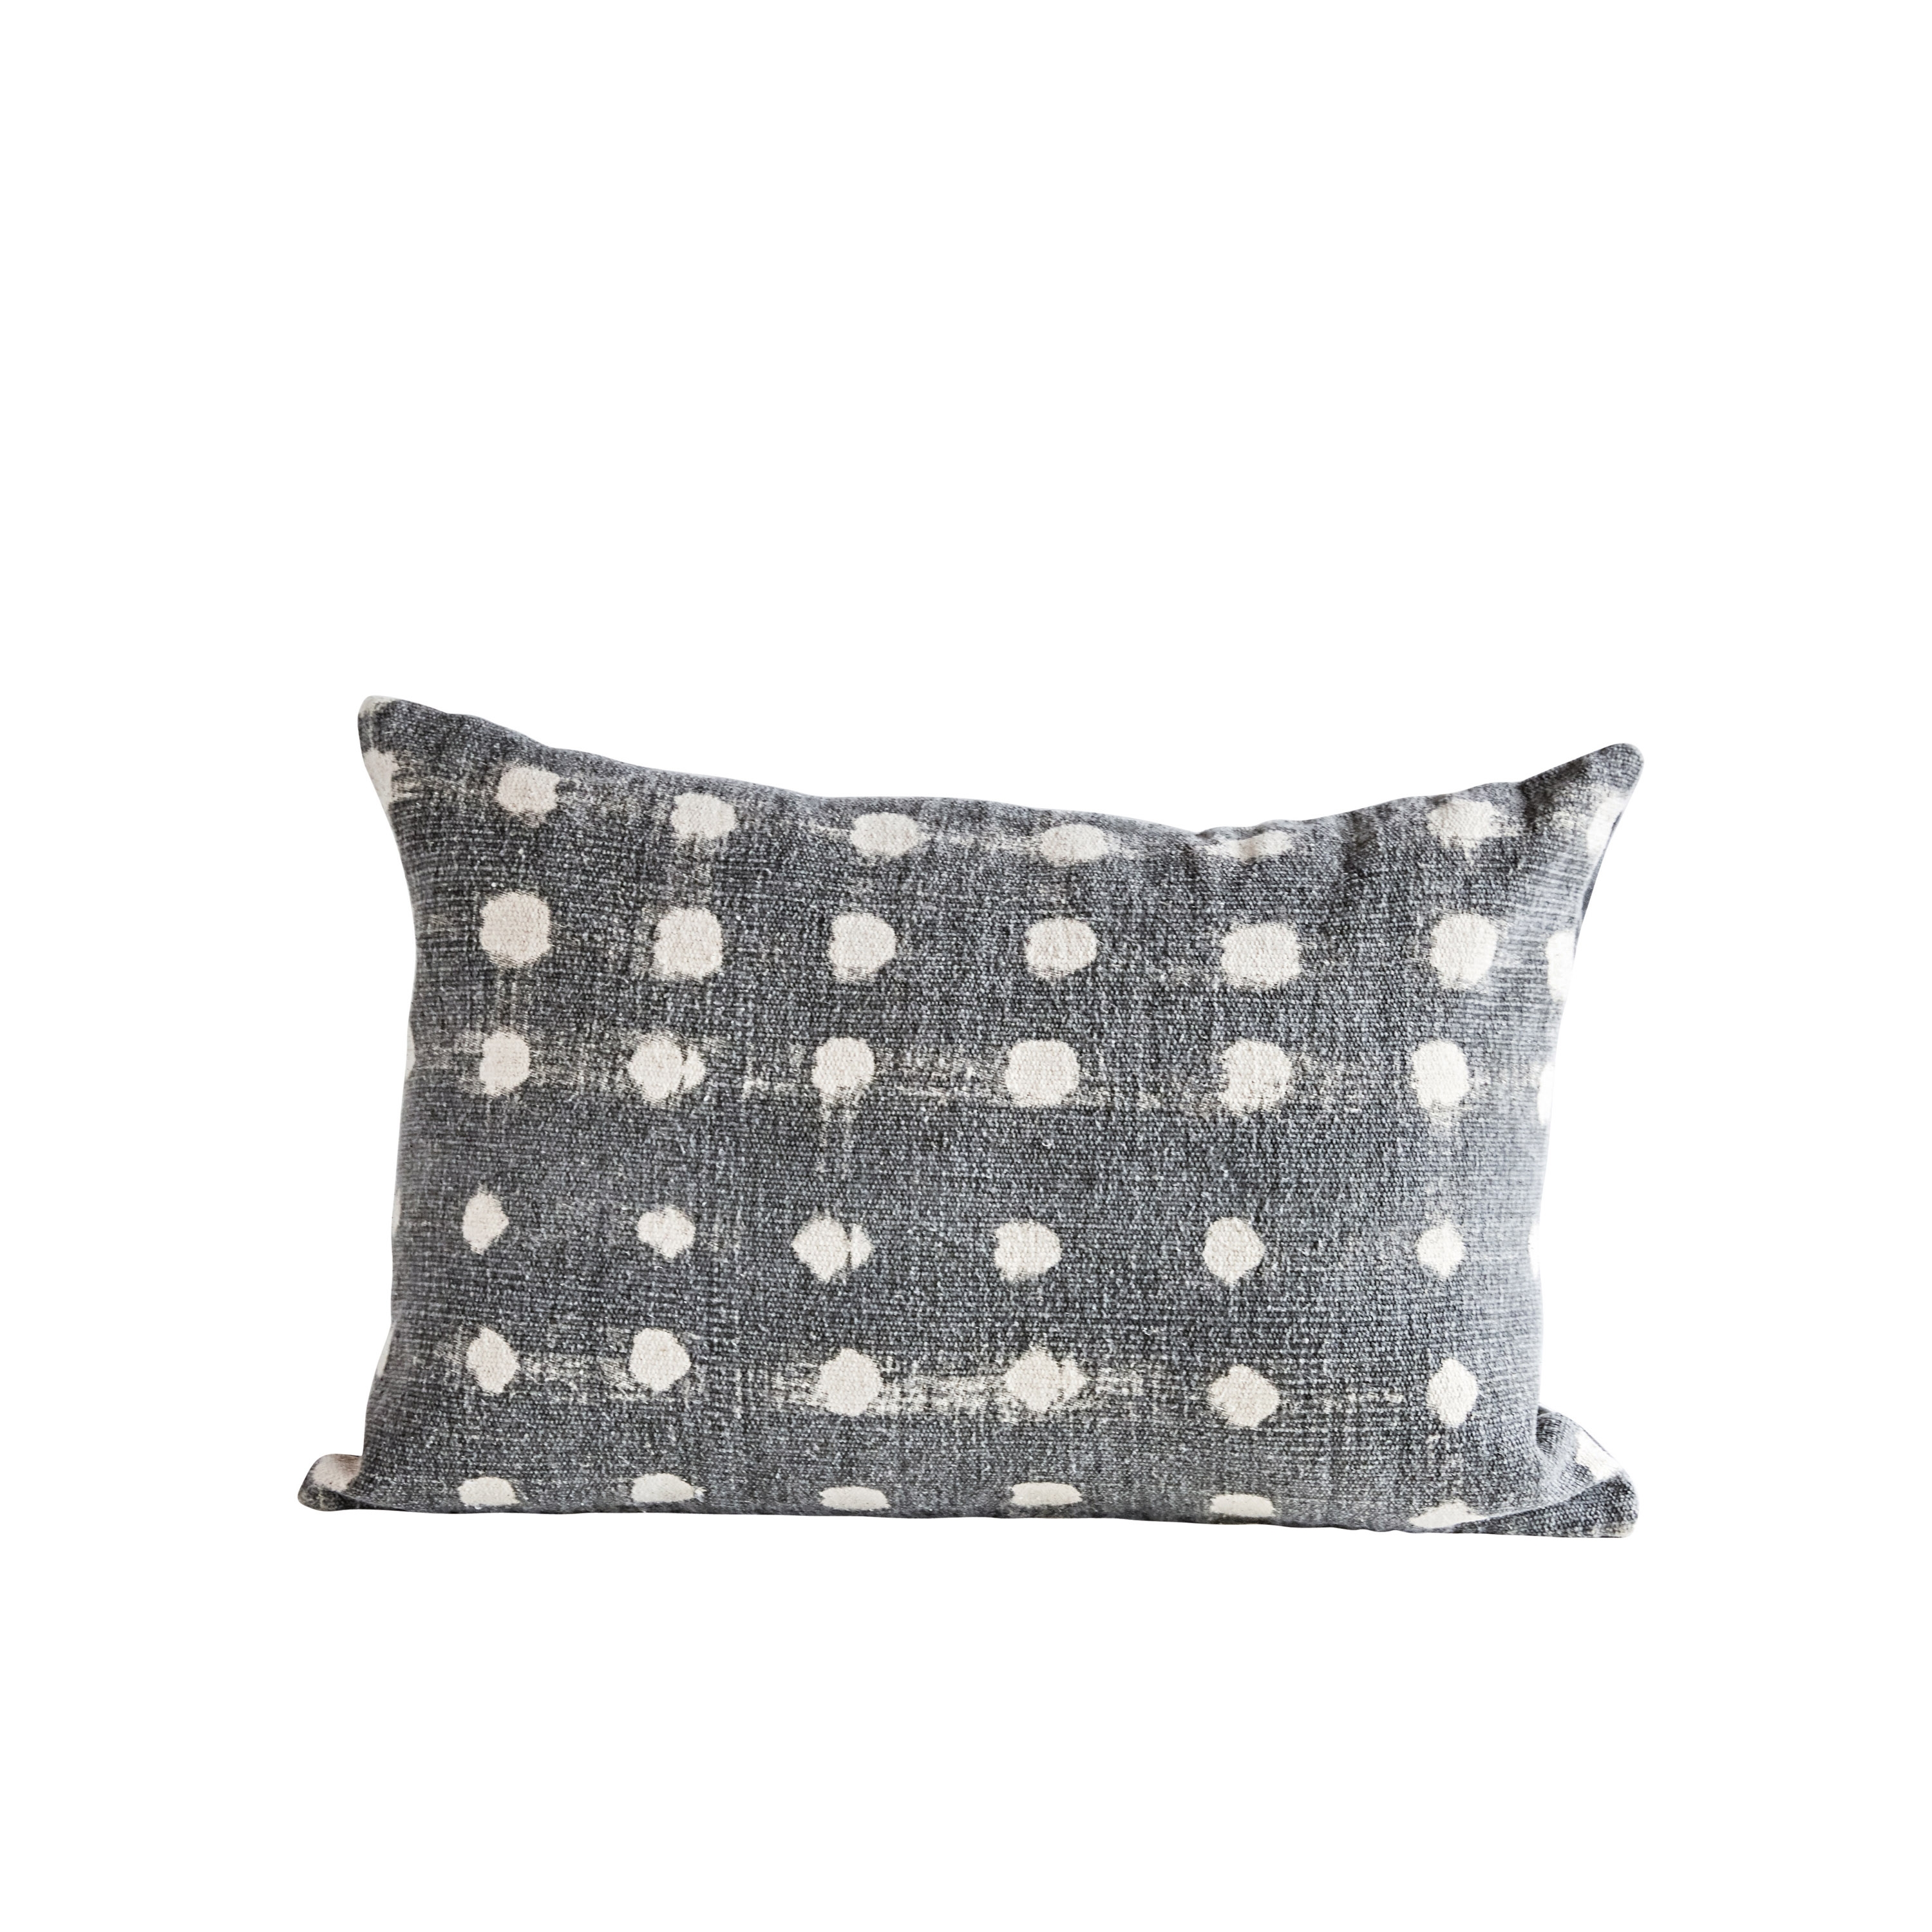 Cotton Slub Pillow with Polka Dots, Gray & Ivory, 24" x 16" - Image 0